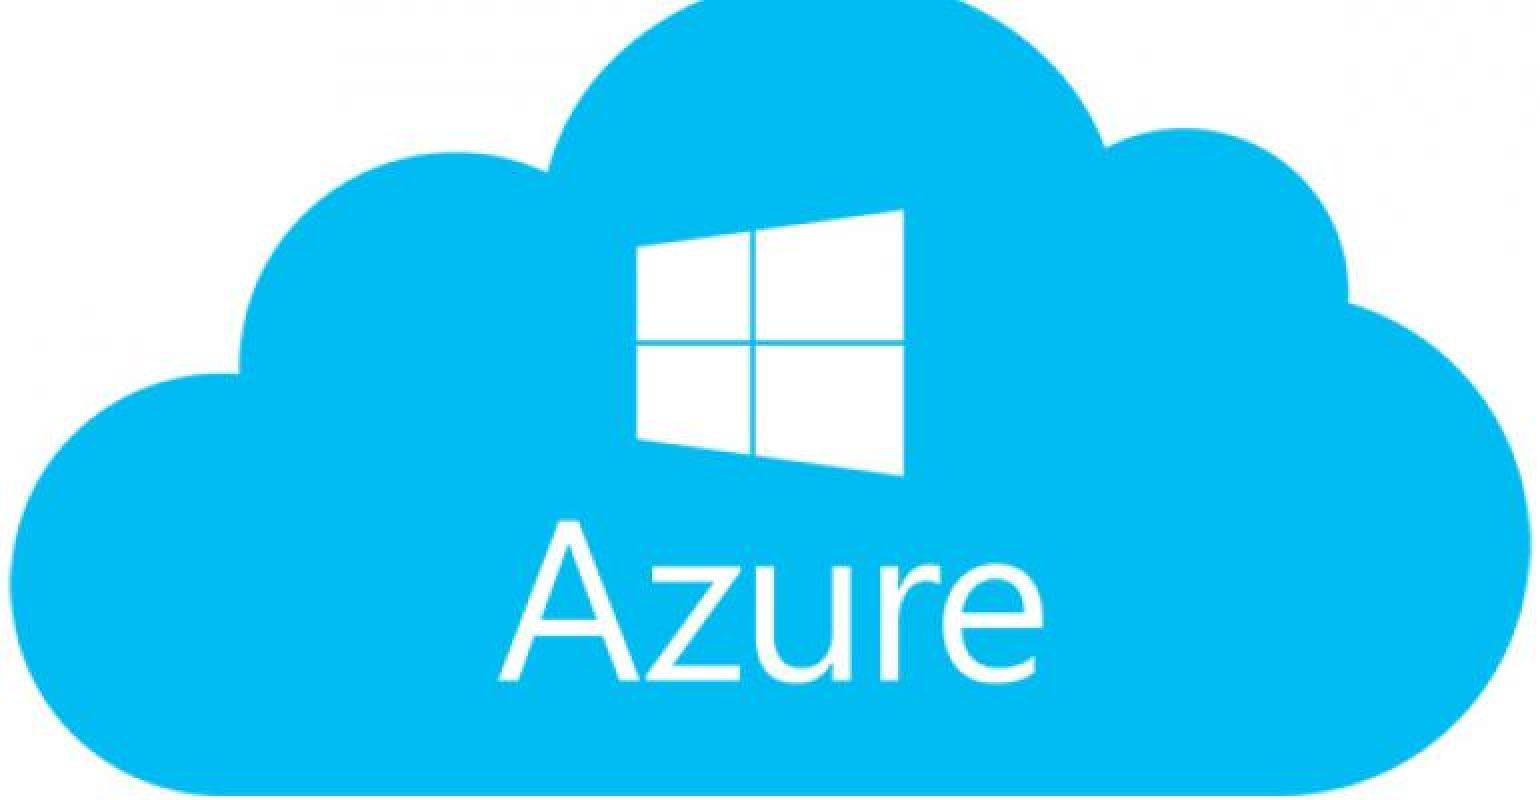 Microsoft Azure training for Beginners in San Diego | Microsoft Azure Fundamentals | Azure cloud computing training | Microsoft Azure Fundamentals AZ-900 Certification Exam Prep (Preparation) Training Course